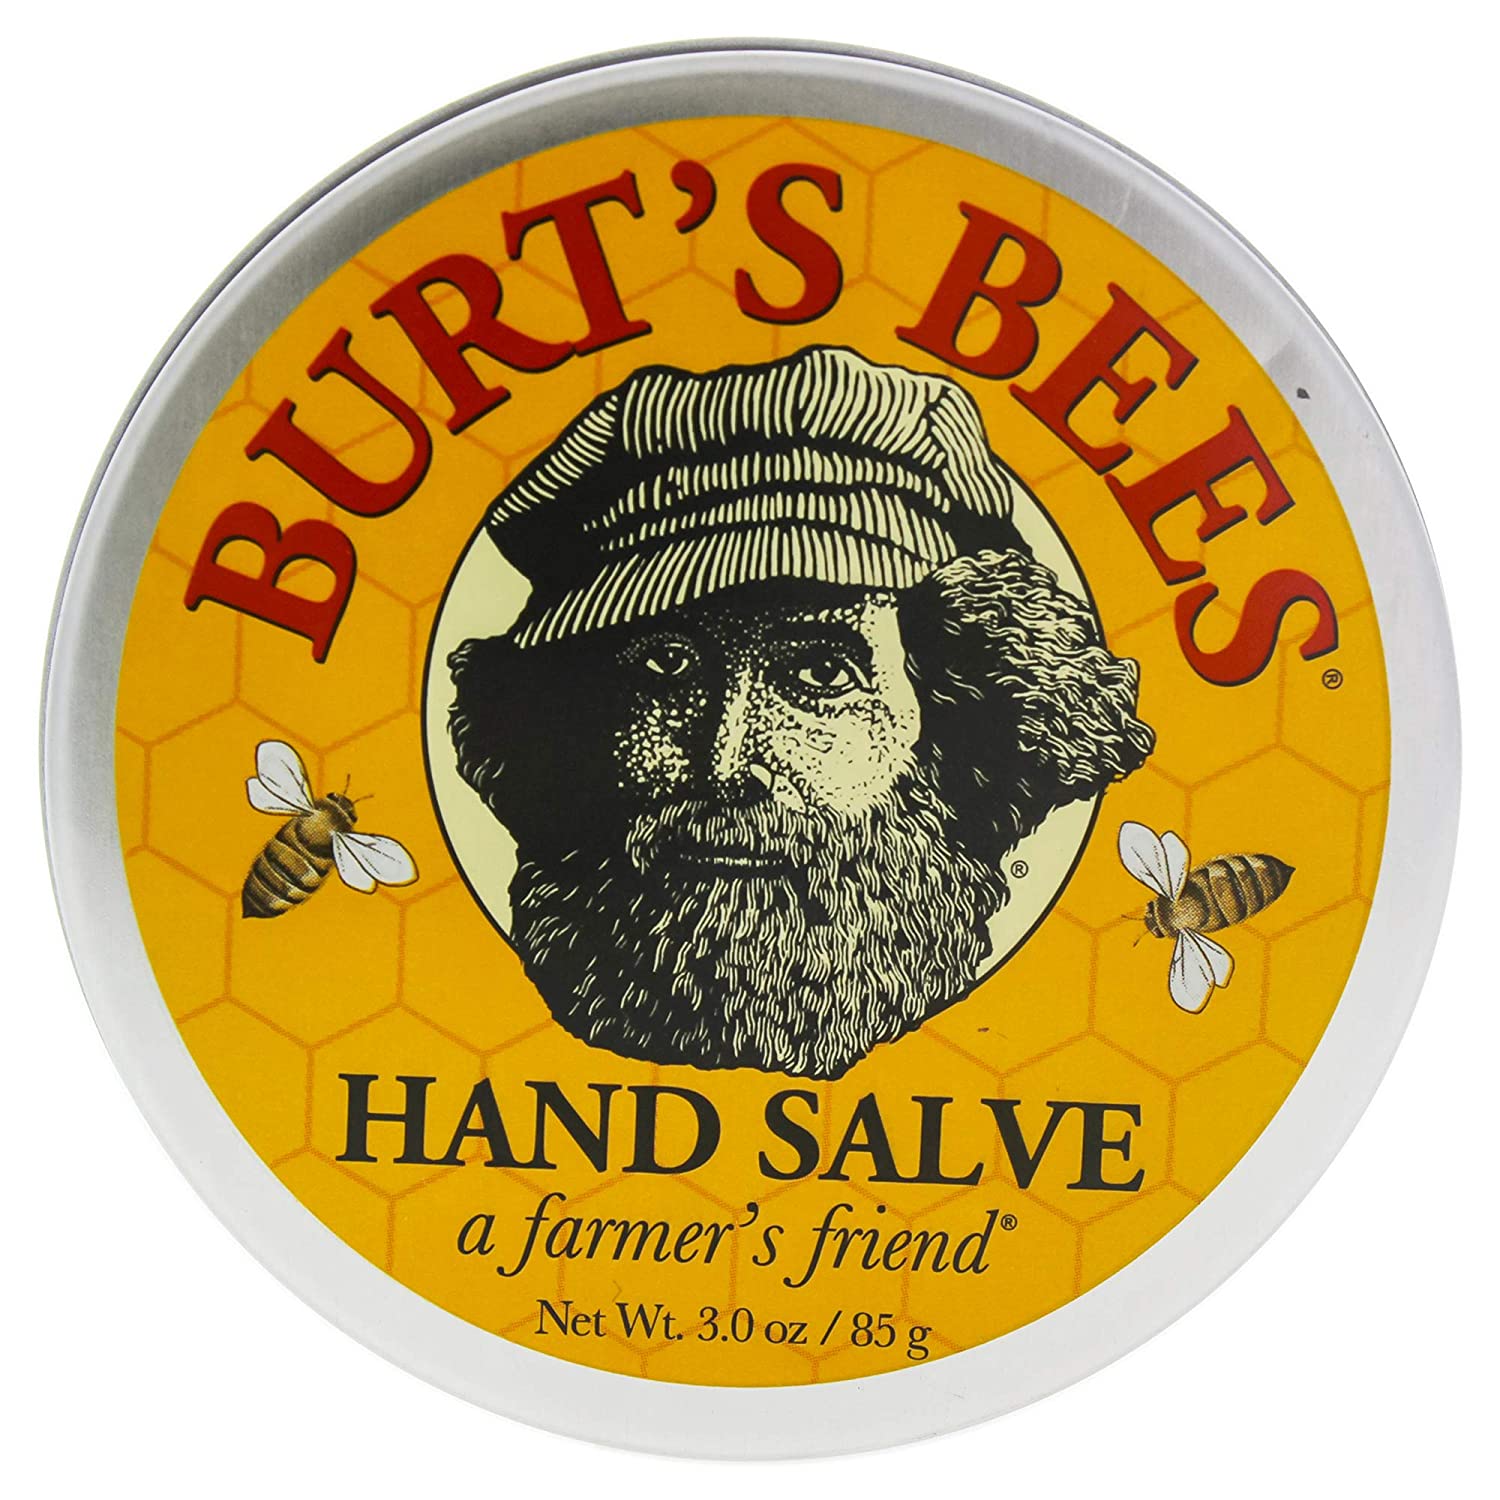 Burt's Bees Natural Hand Salve